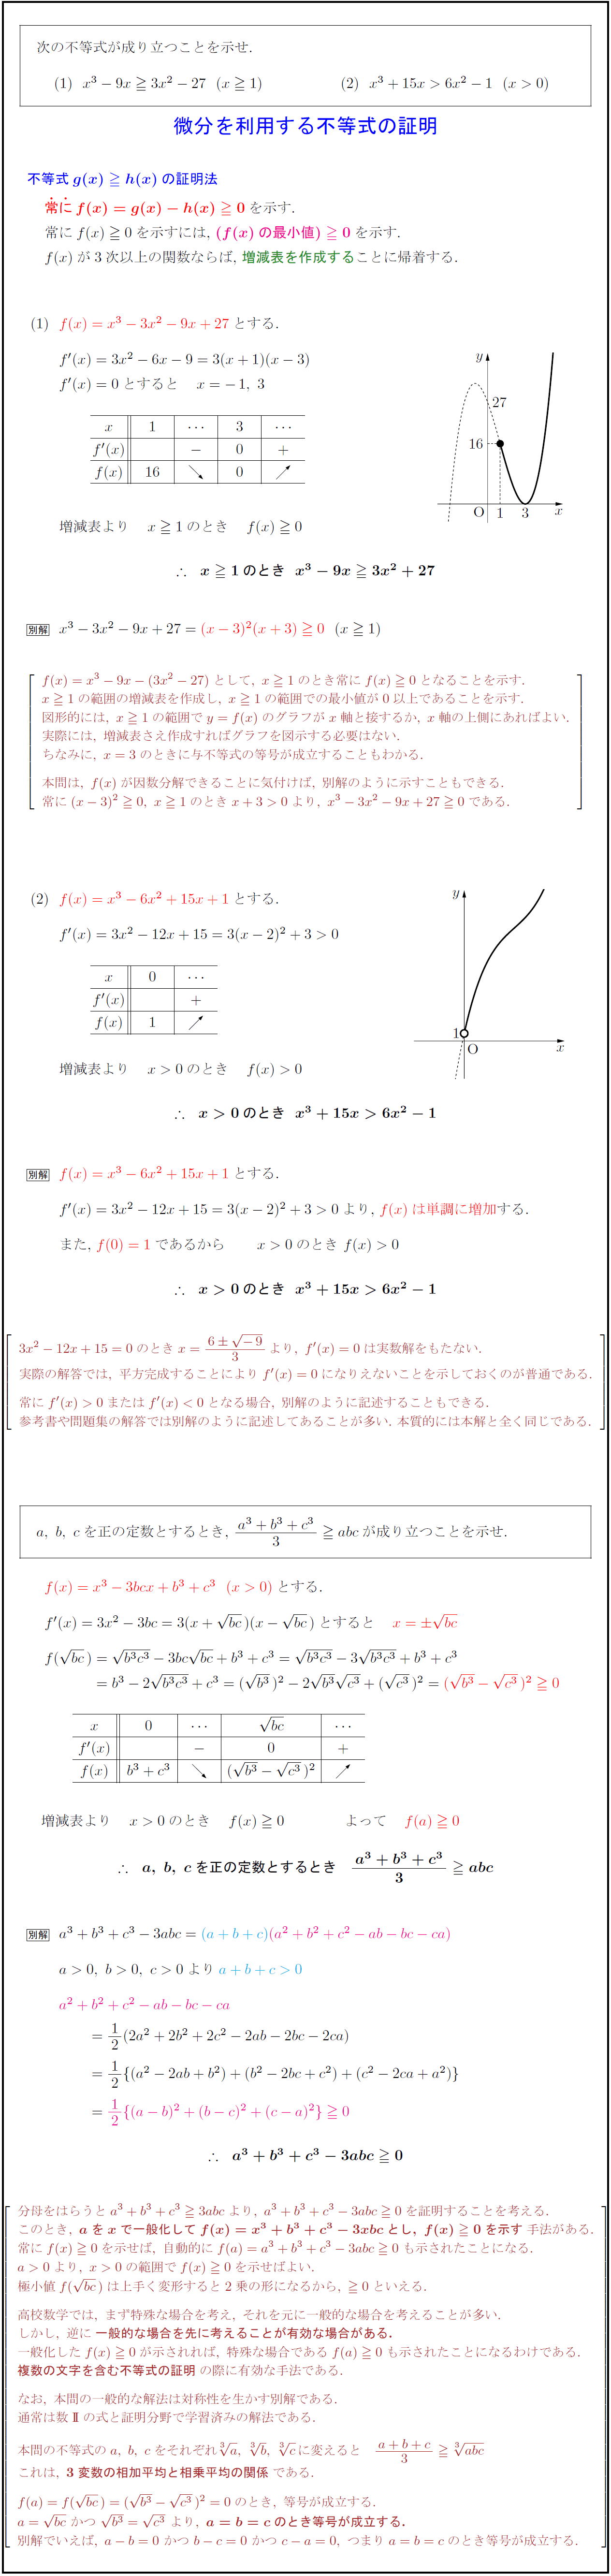 differential-formula